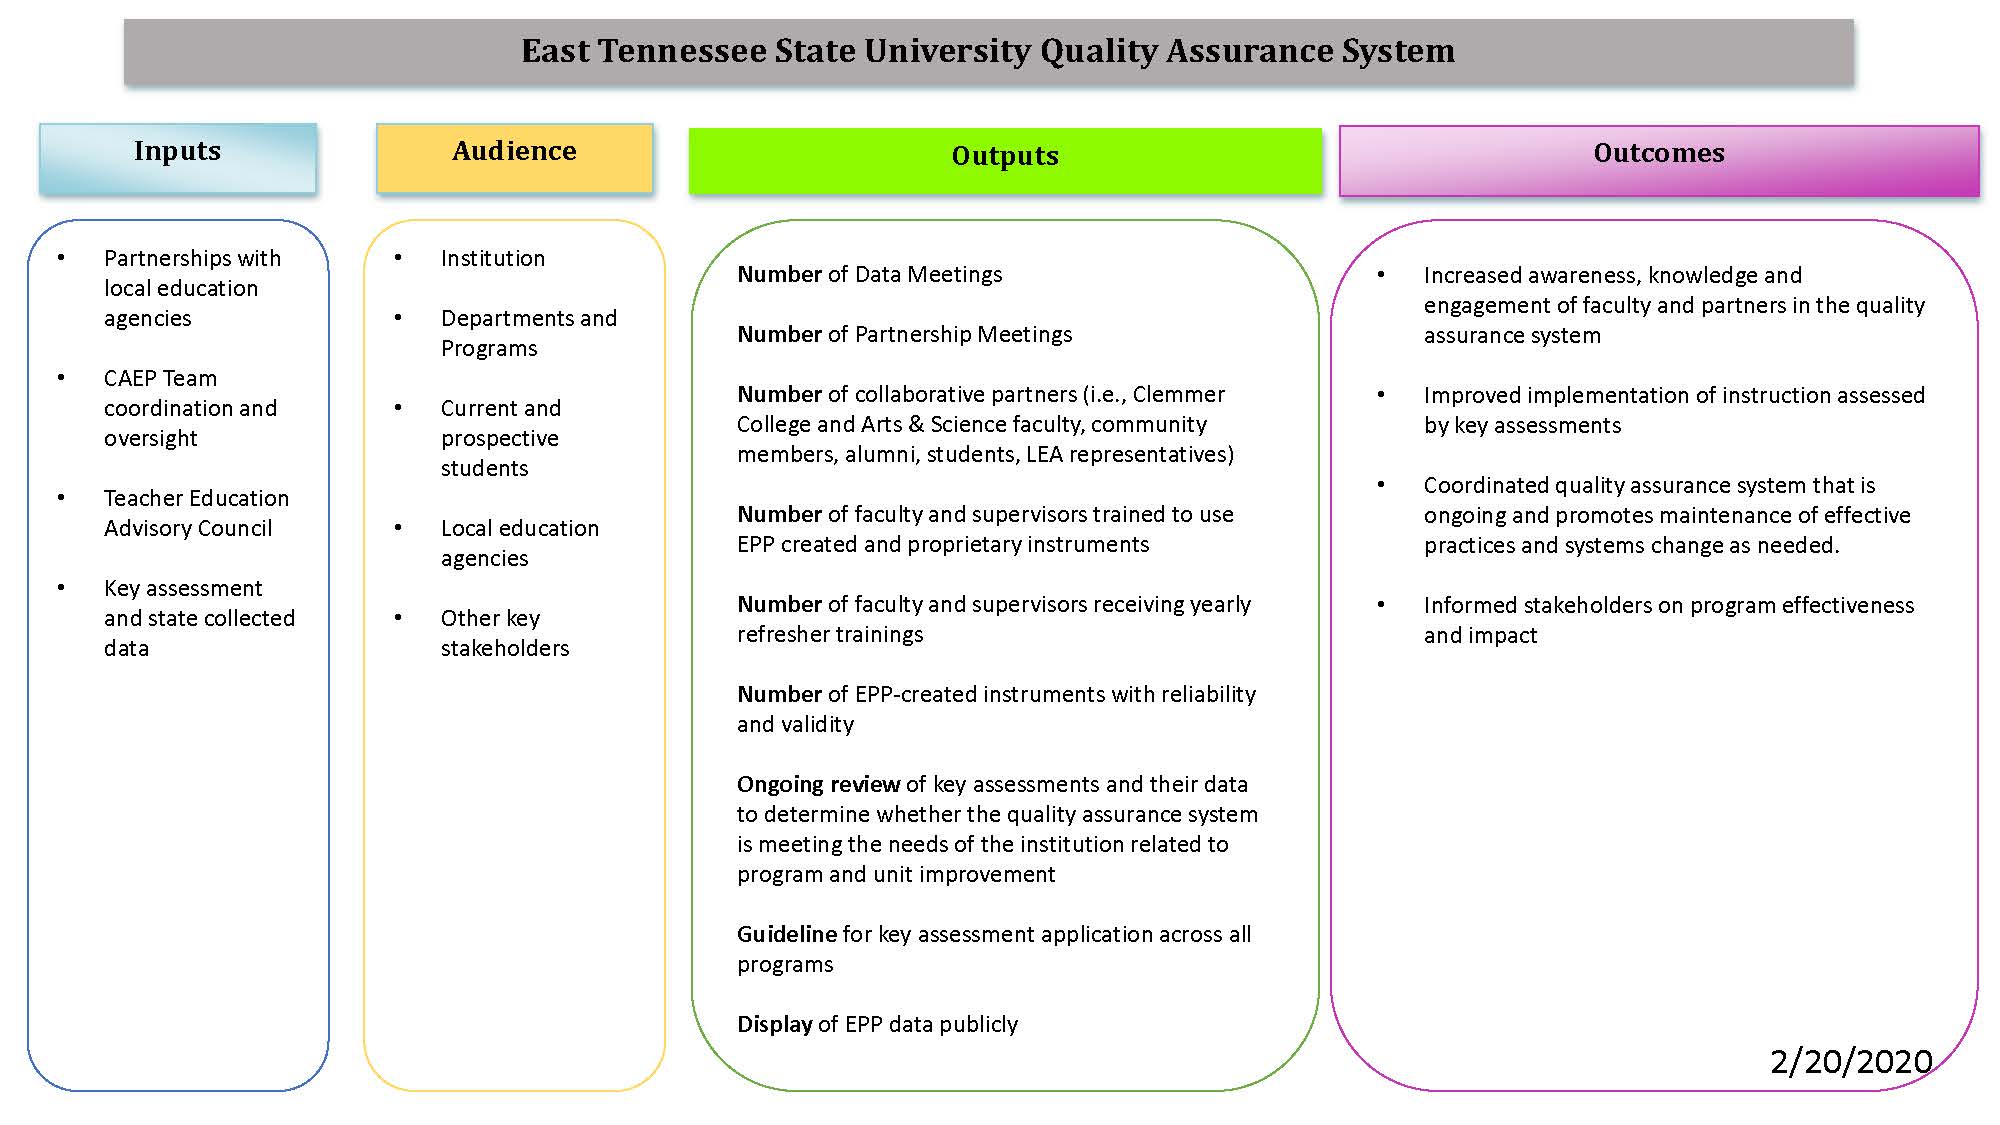 Quality Assurance System Logic Model